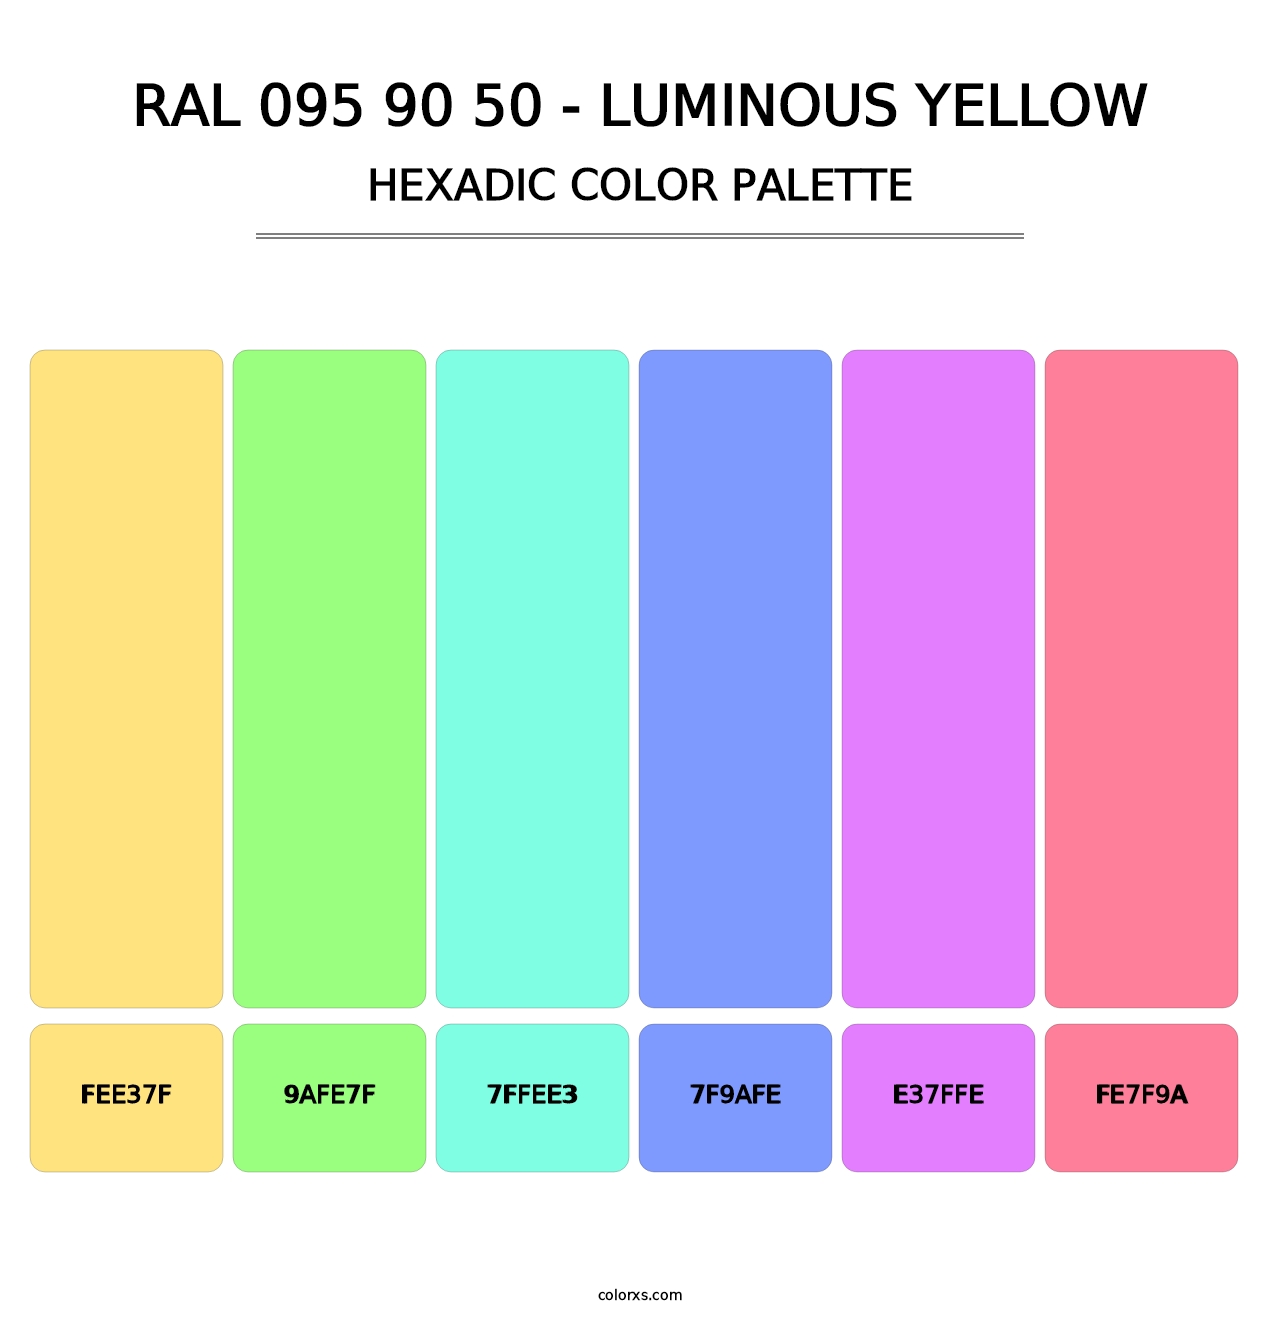 RAL 095 90 50 - Luminous Yellow - Hexadic Color Palette